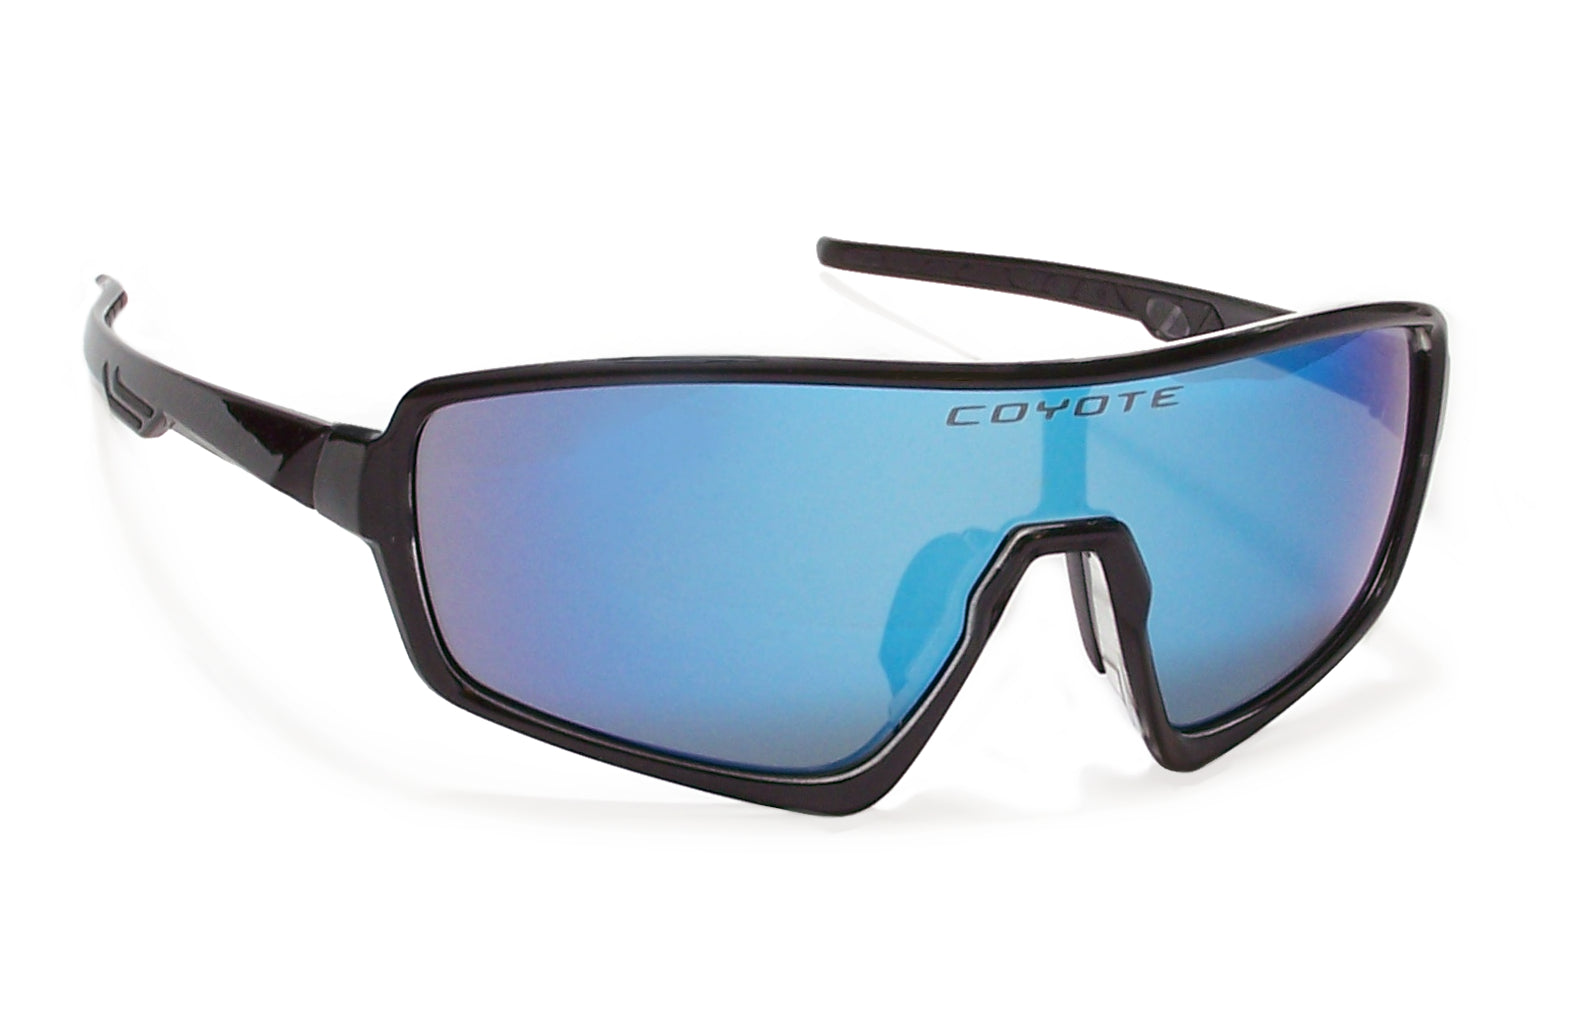 Coyote Kaos Impact-Resistant Polycarbonate Sunglasses - Black/Blue